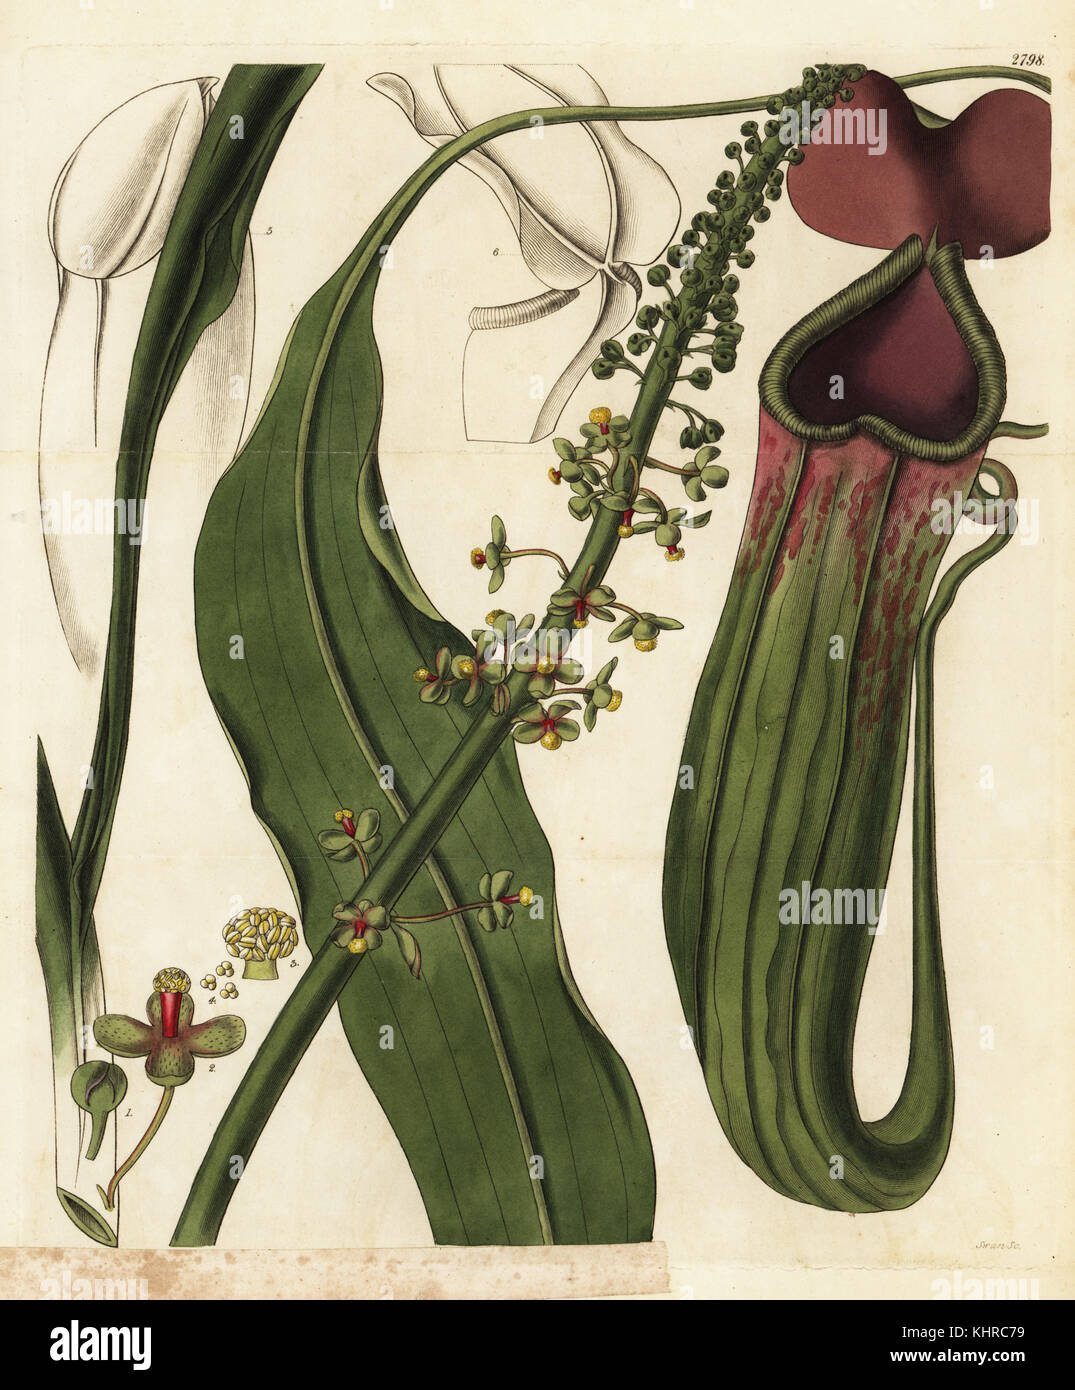 Nepenthes Rajah | Artwork | Redfern Natural History